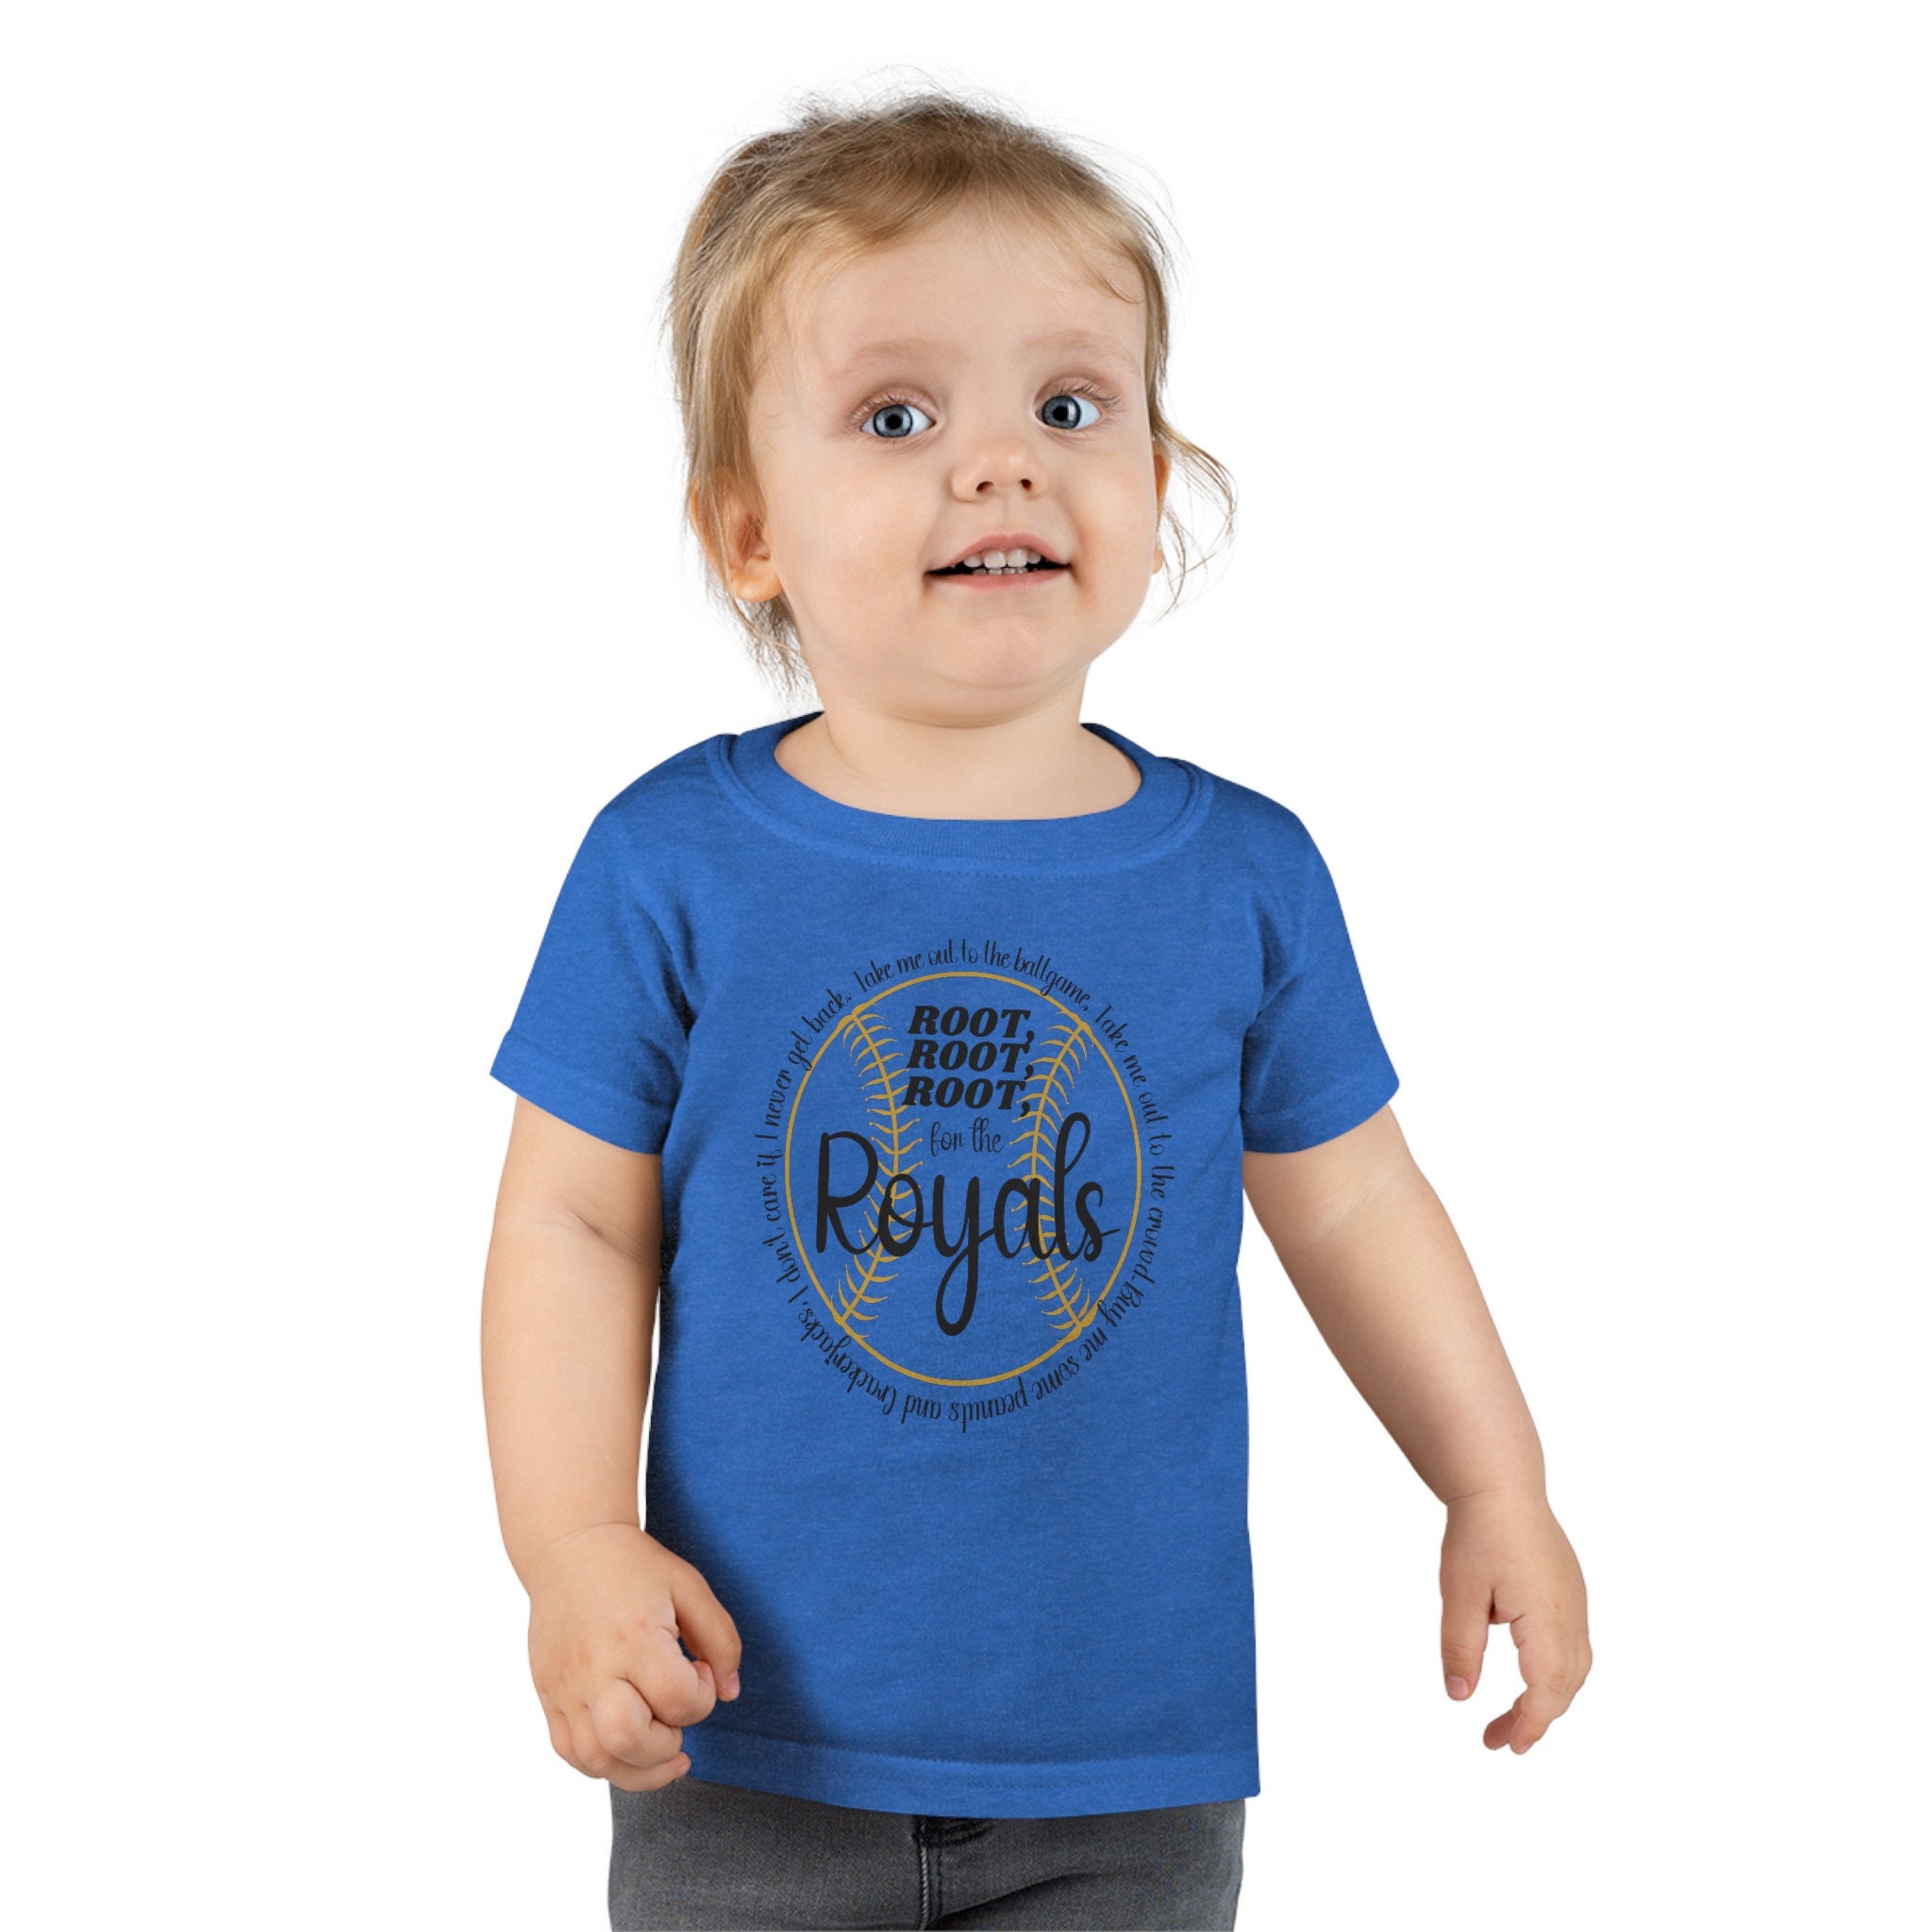 Kansas City Royals Nike Toddler City Connect Graphic T-Shirt - Navy